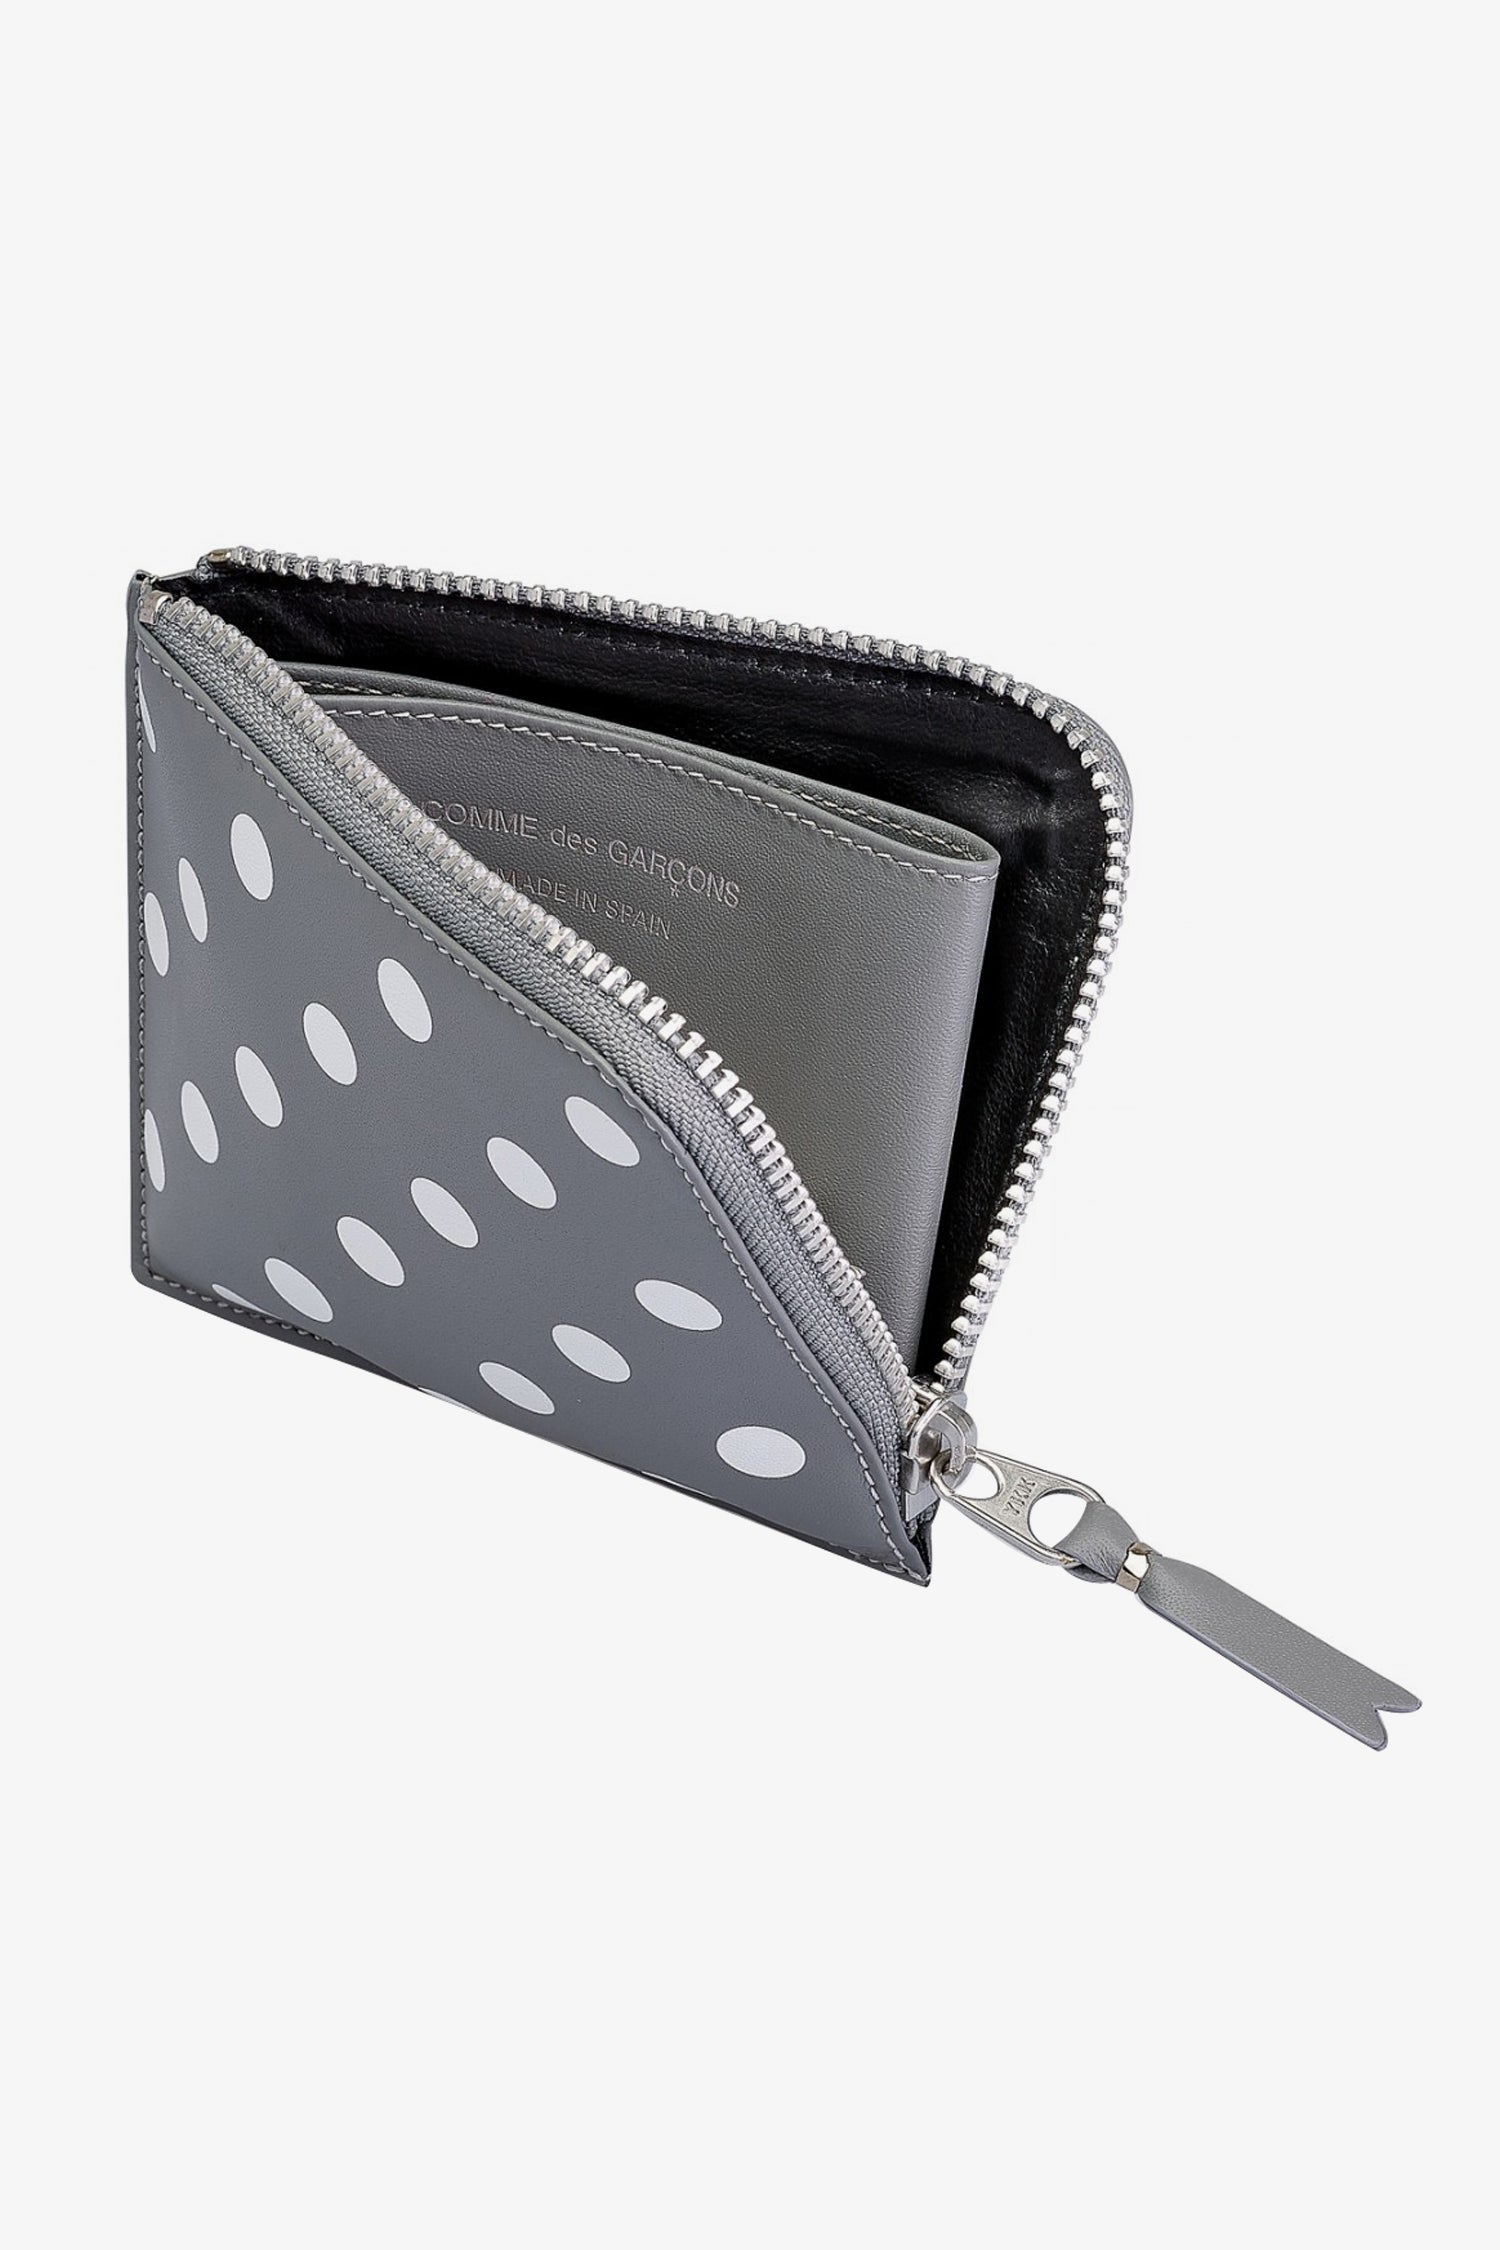 Selectshop FRAME - COMME DES GARCONS WALLETS Polka Dot Leather Wallet (SA3100PD) Accessories Dubai